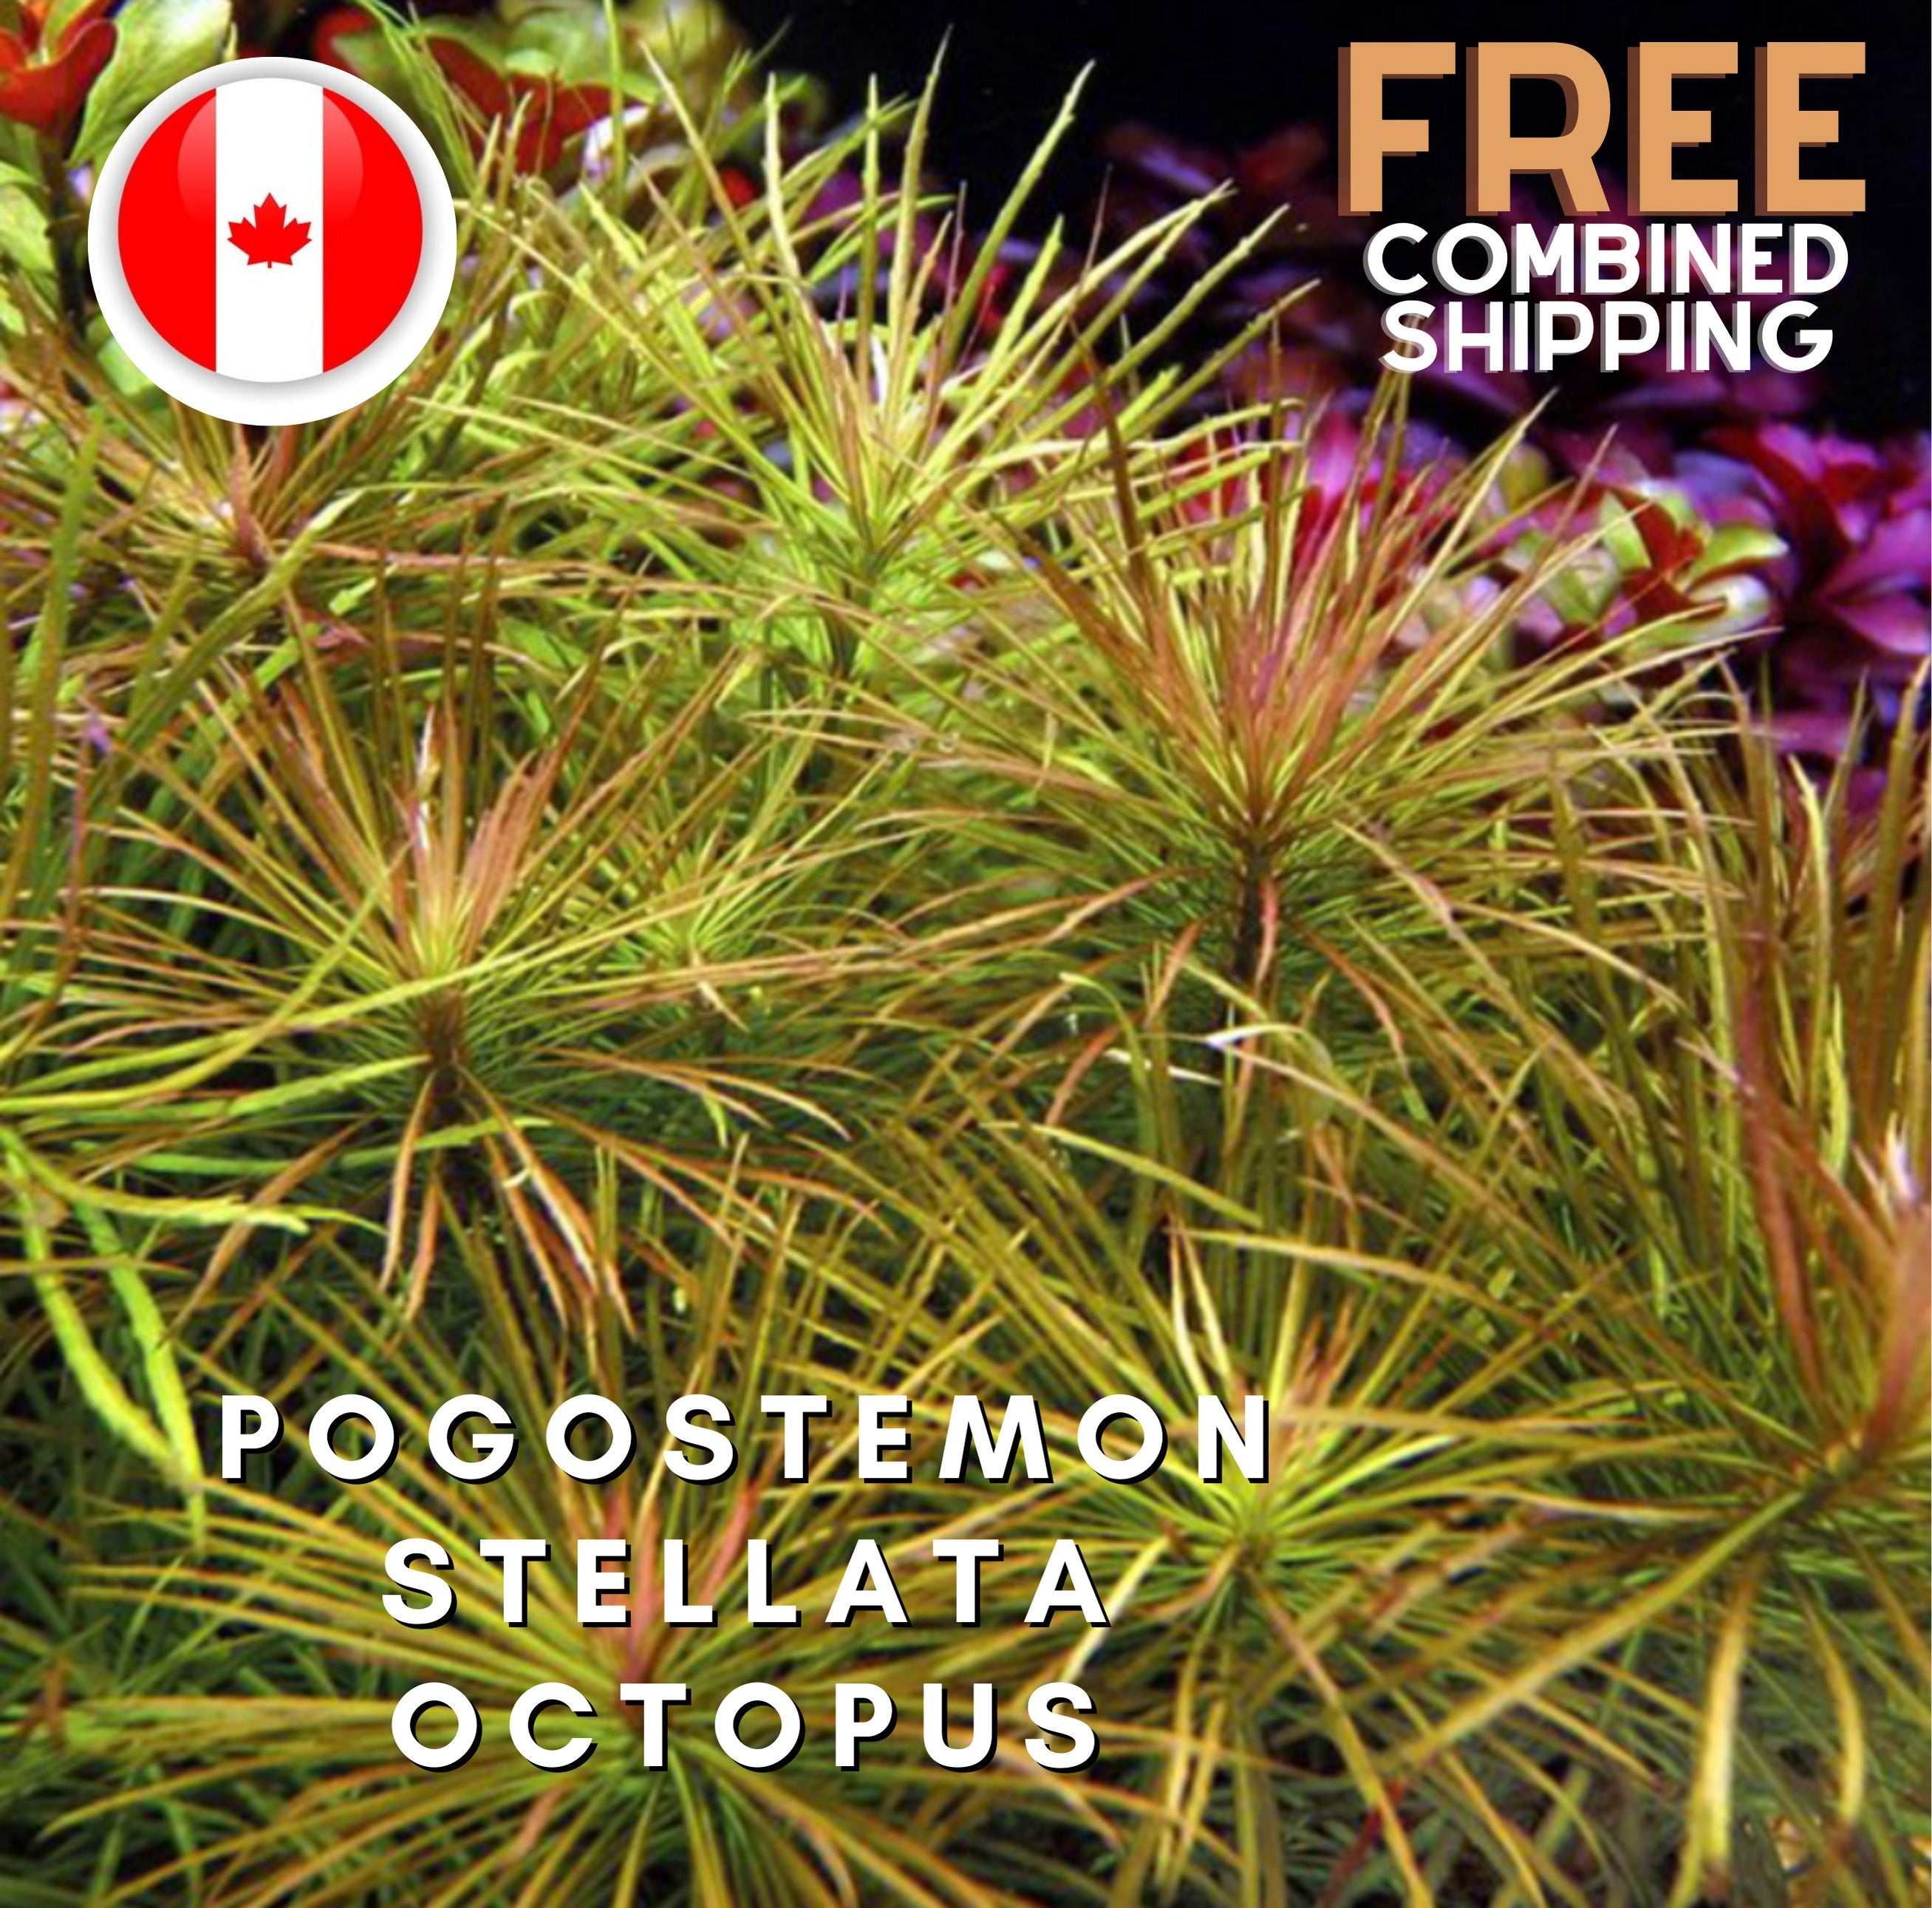 Pogostemon stellata octopus - 6-10 Stems - Easy - Aquarium Plants - Aquatic Plants - Canada Seller - Combined Shipping